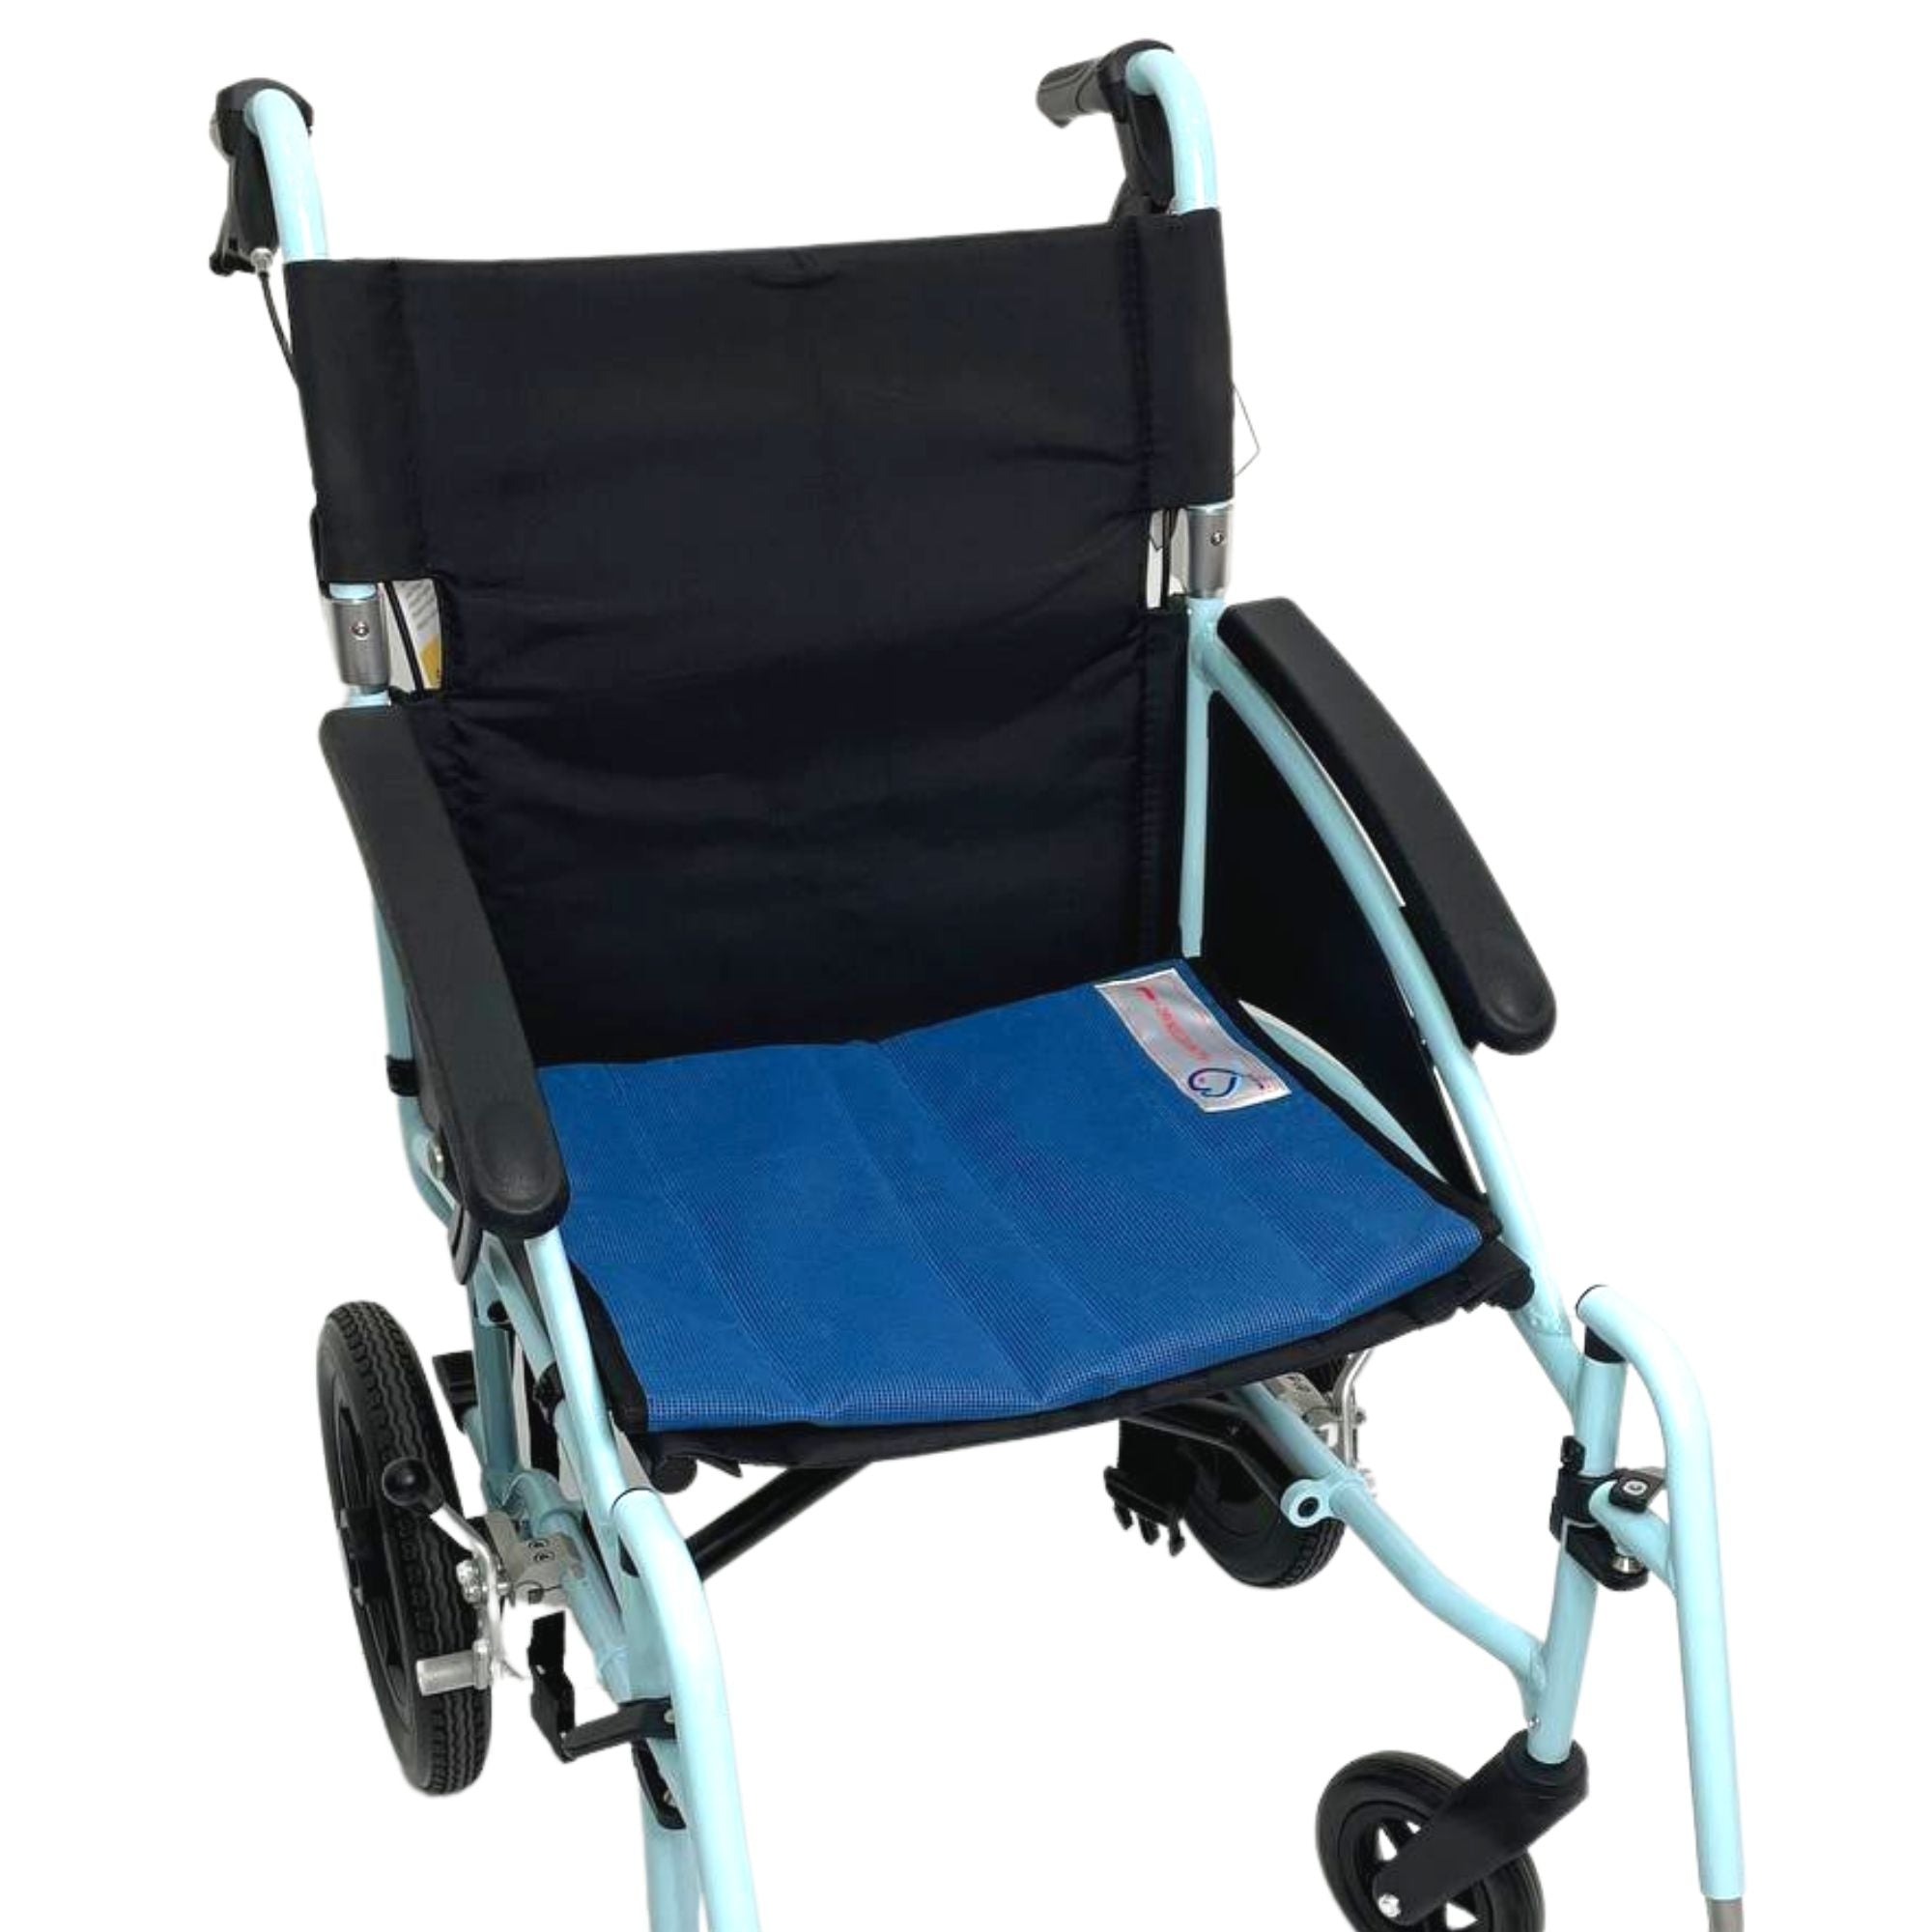 Anti-Slip Wheelchair Seat Cover